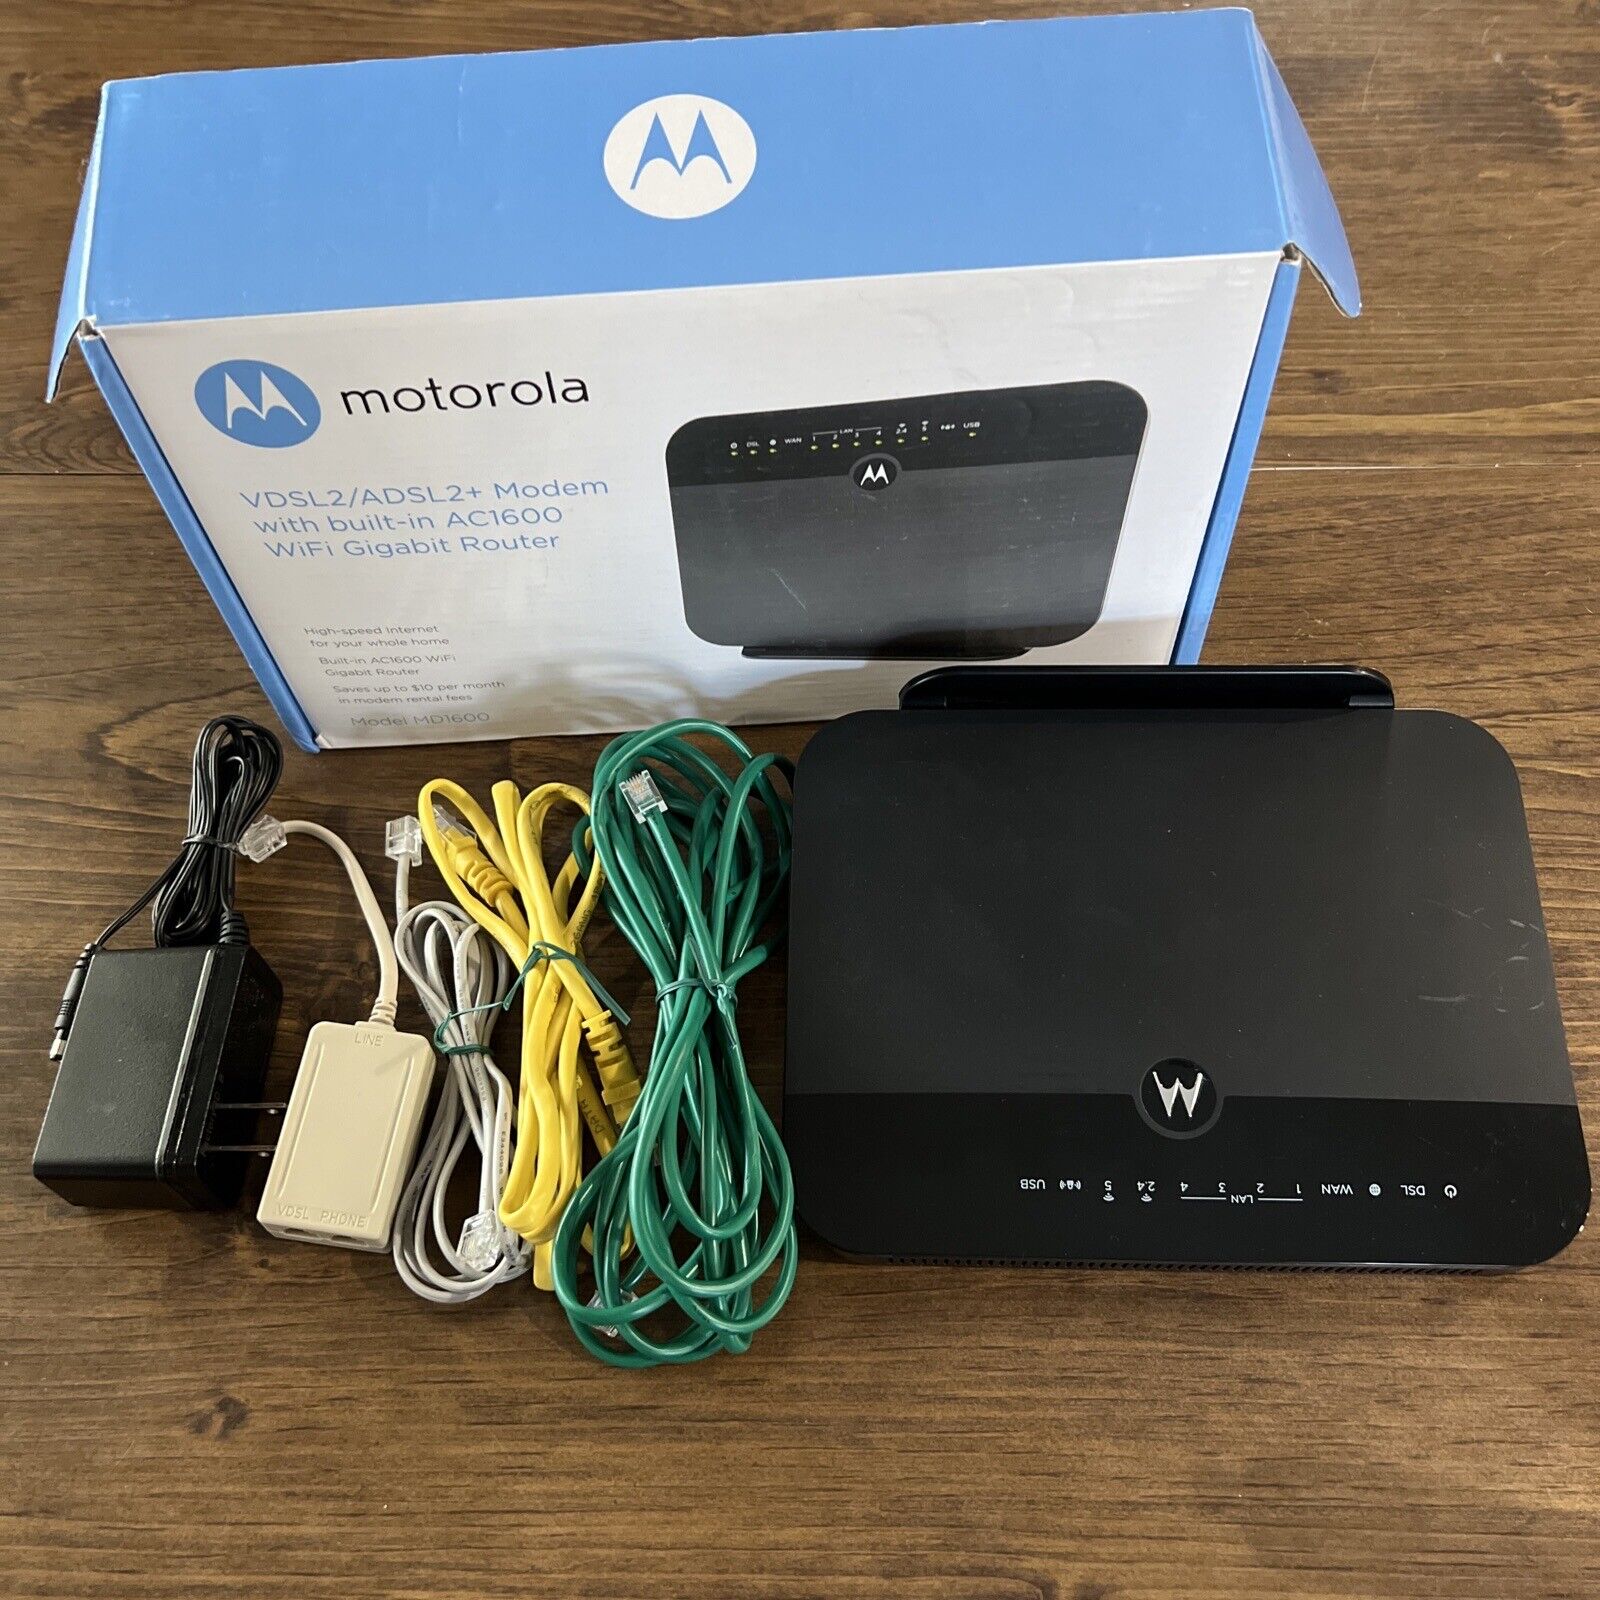 Motorola MD1600 VDSL2/ADSL2+ Modem and AC1600 WiFi Gigabit Router